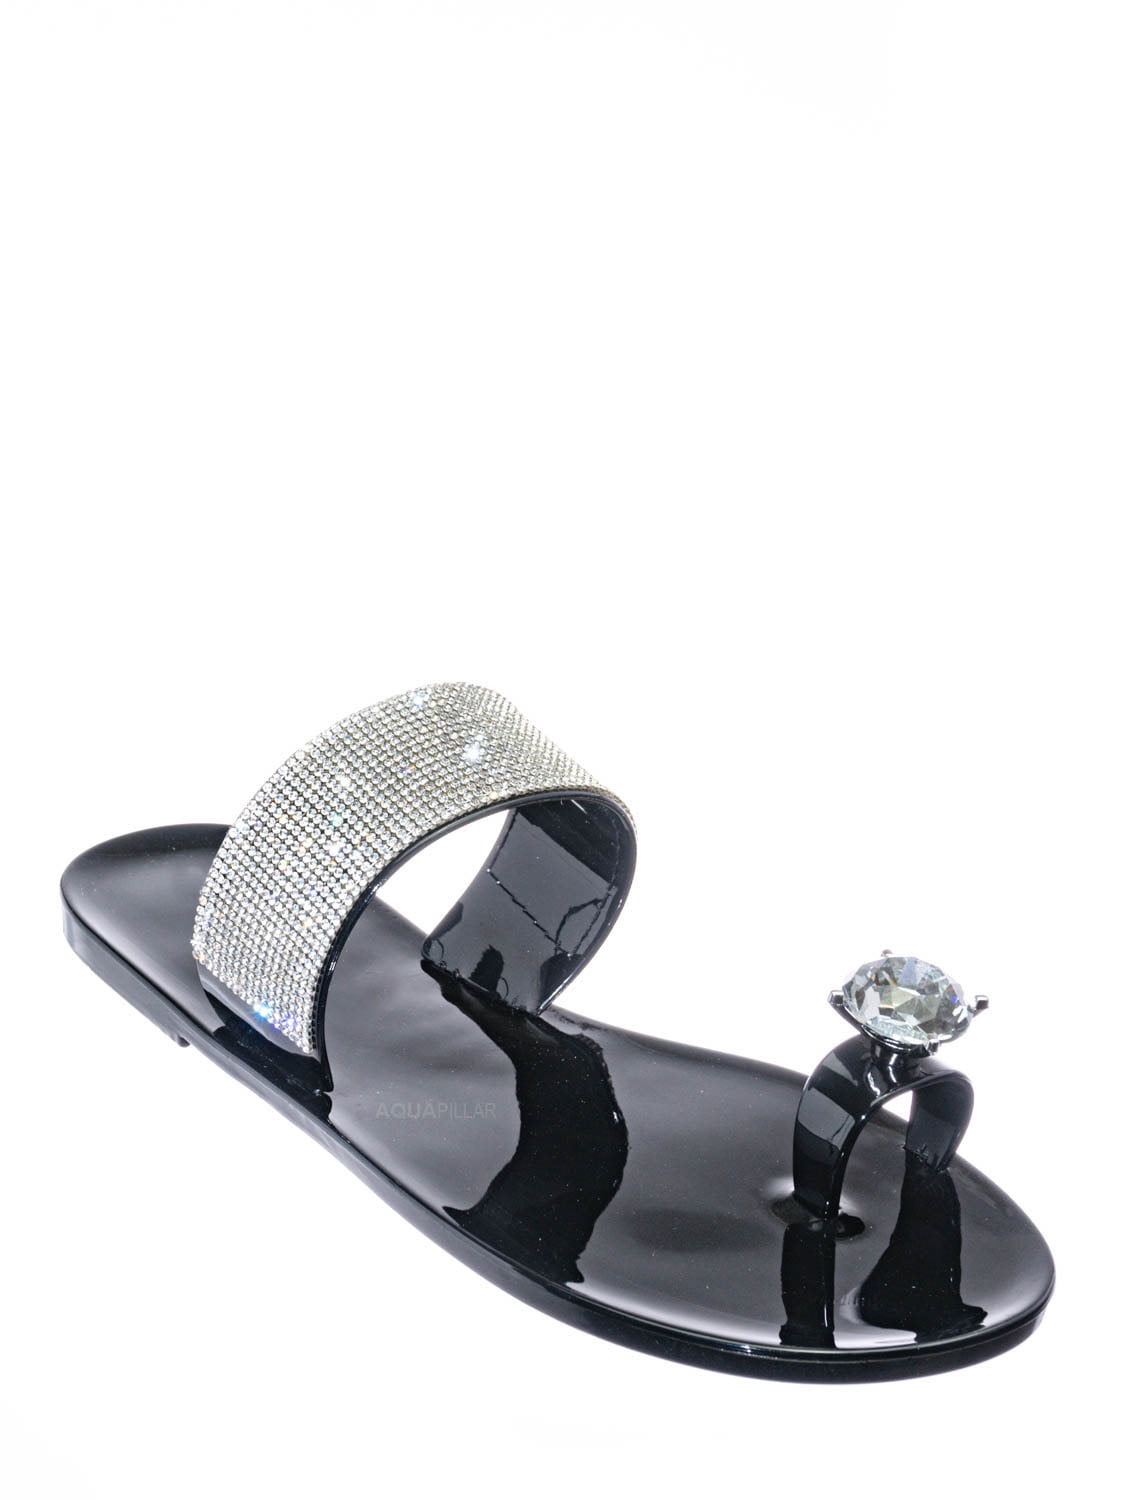 Size 8 M *NWB* GC SHOES Women's Diamond blue Toe Ring Sandals w Rhinestones 